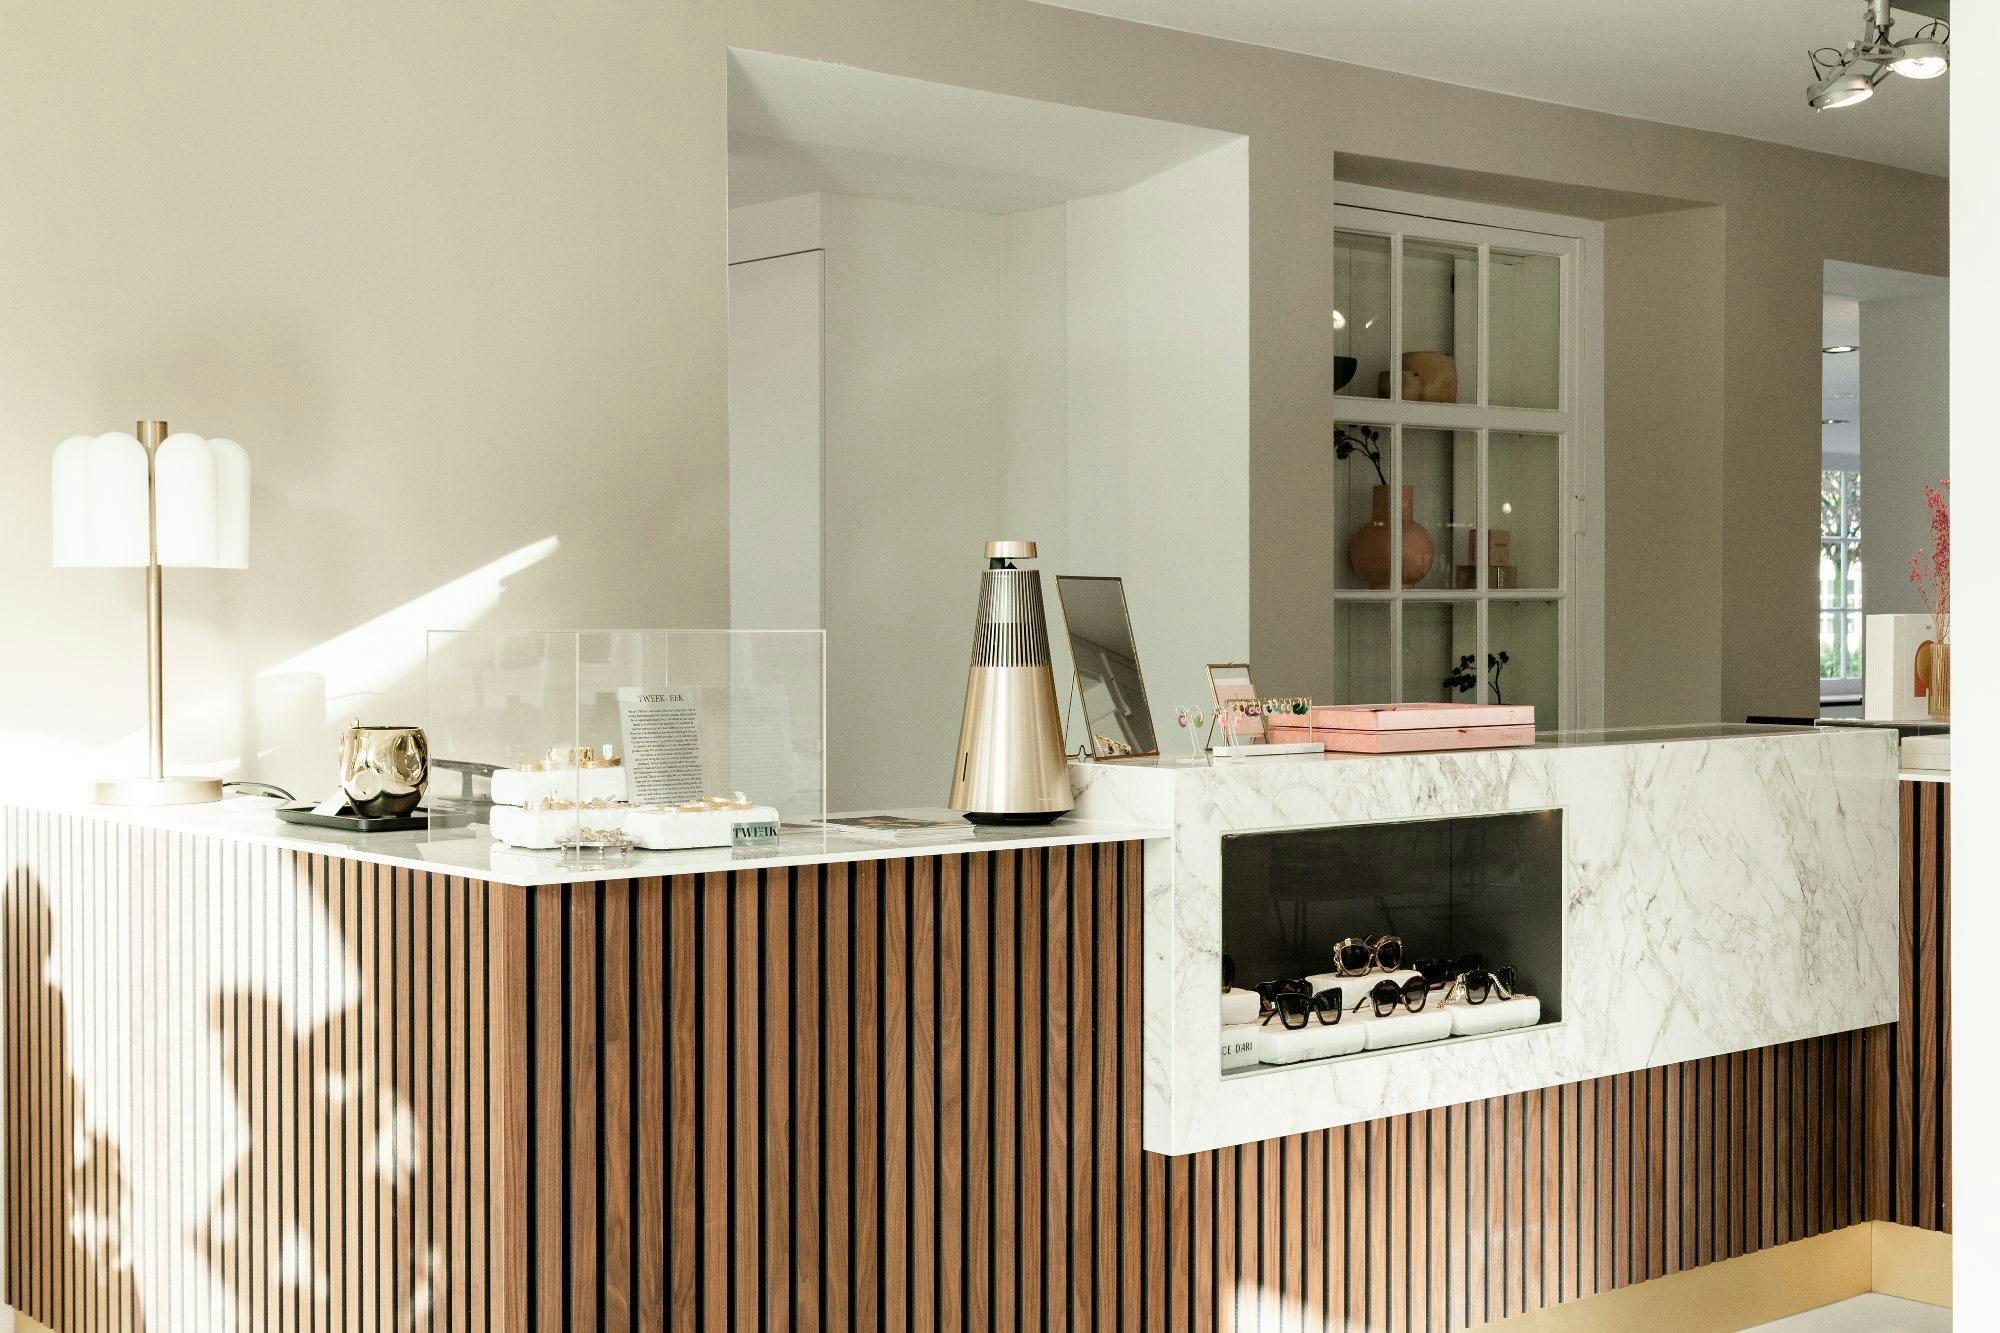 Číslo obrázku 35 aktuální sekce The innovative interior design centre Nidum chooses Cosentino for its elegant and welcoming finishes Cosentino Česká Republika